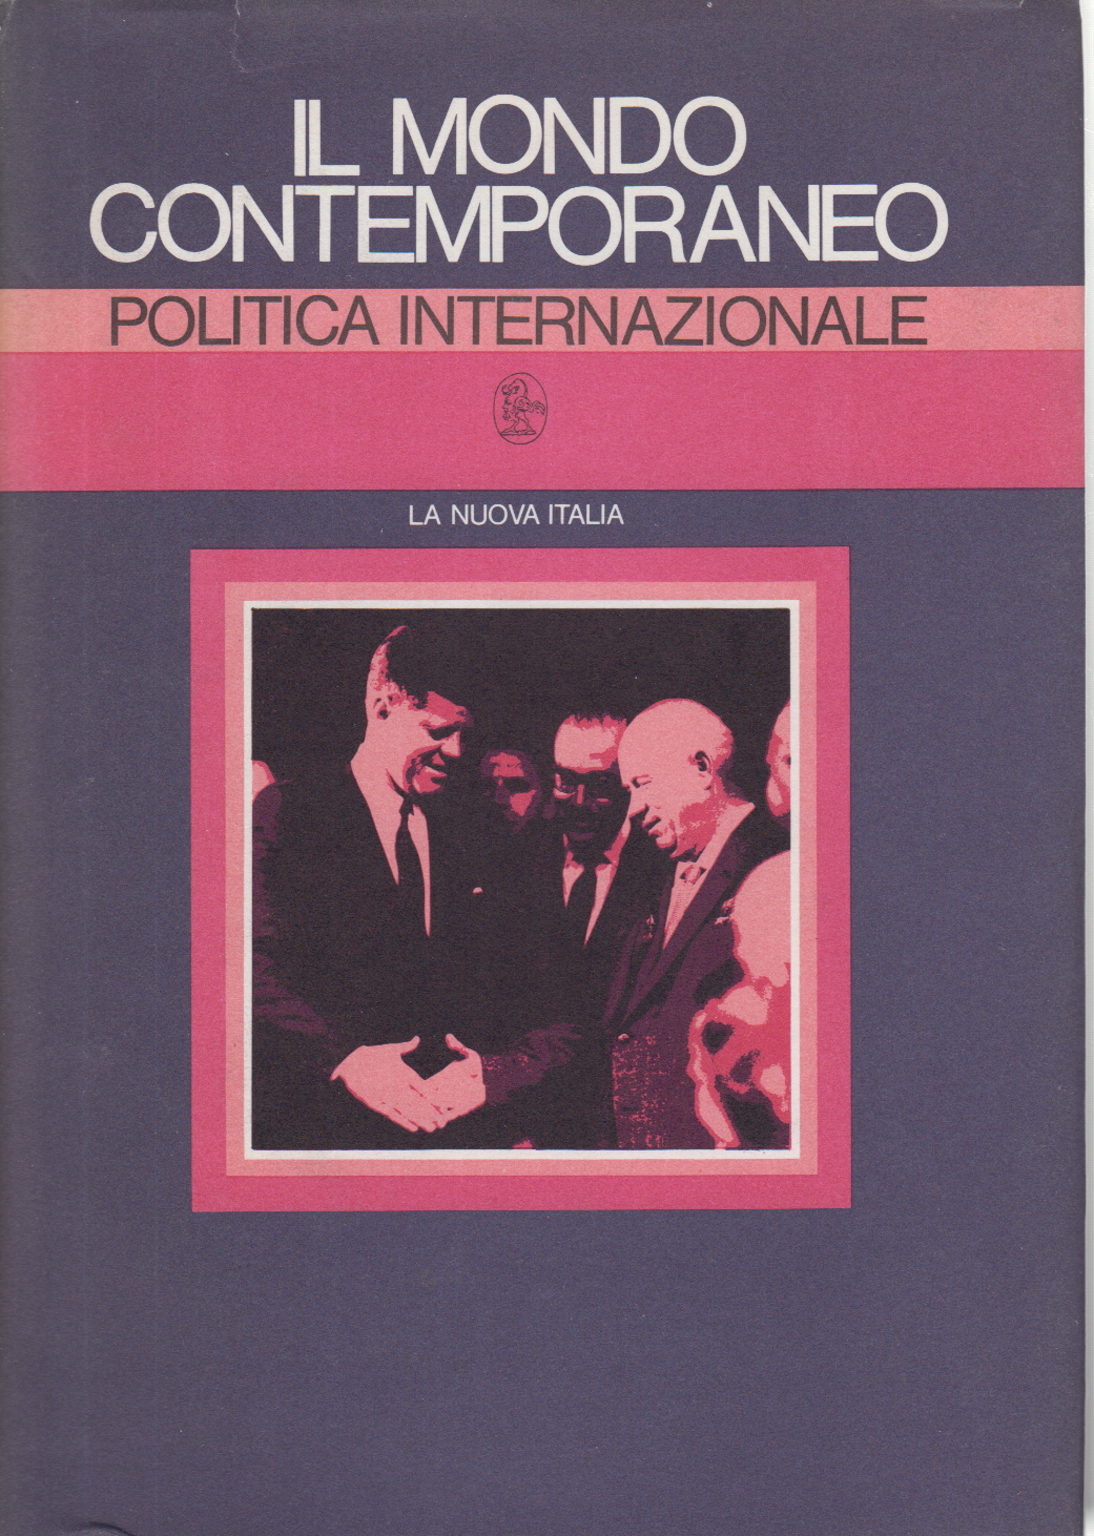 International politics, Luigi Bonanate